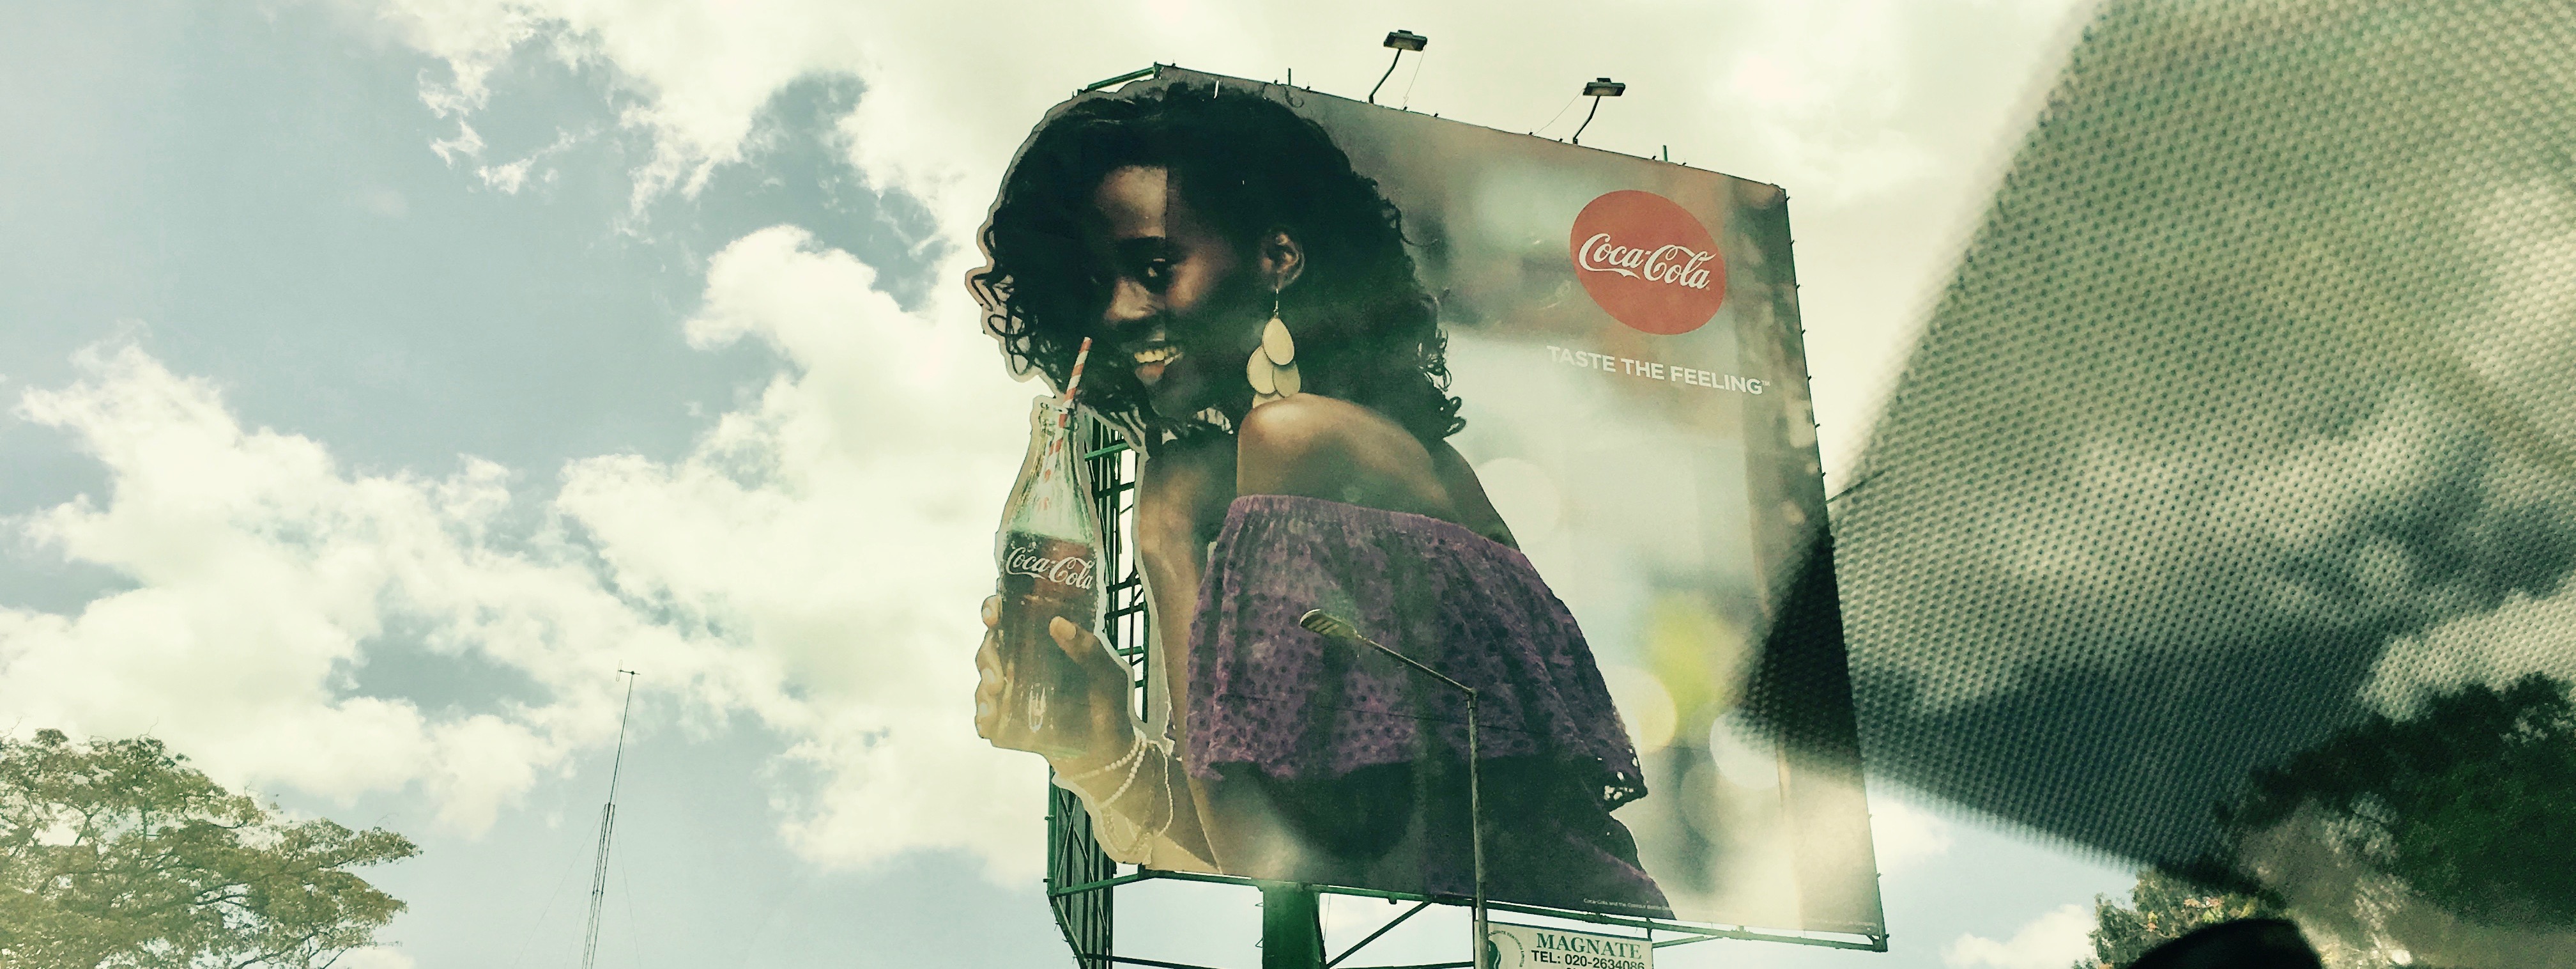 Nairobi advertising